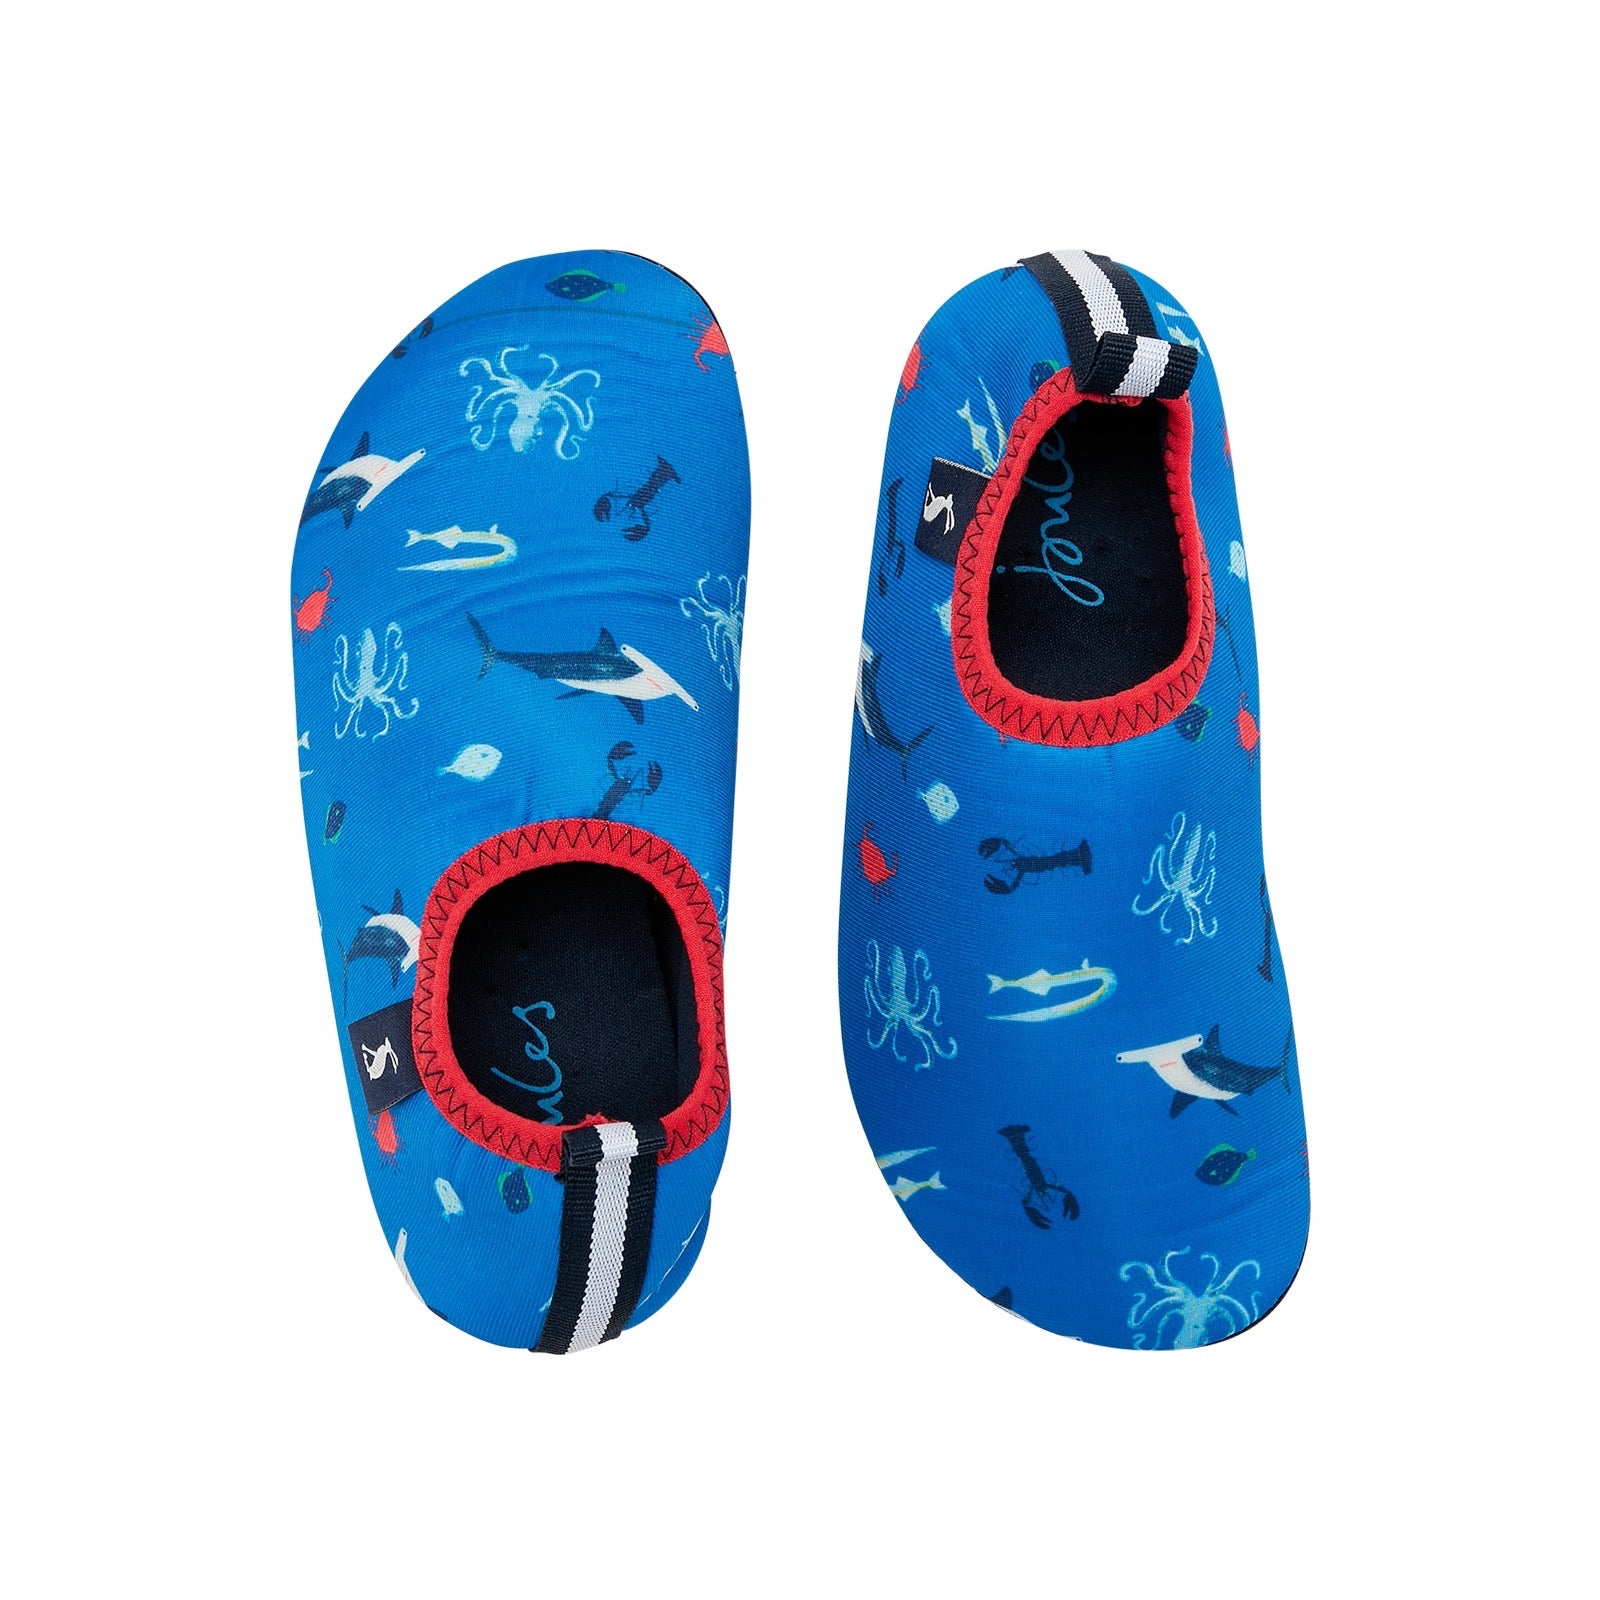 Joules Beacon Beach Shoes Sea Creatures Footwear UK8 INFANT / Blue,UK9 KIDS / Blue,UK10 KIDS / Blue,UK11 KIDS / Blue,UK12 KIDS / Blue,UK13 KIDS / Blue,UK1 KIDS / Blue,UK2 KIDS / Blue